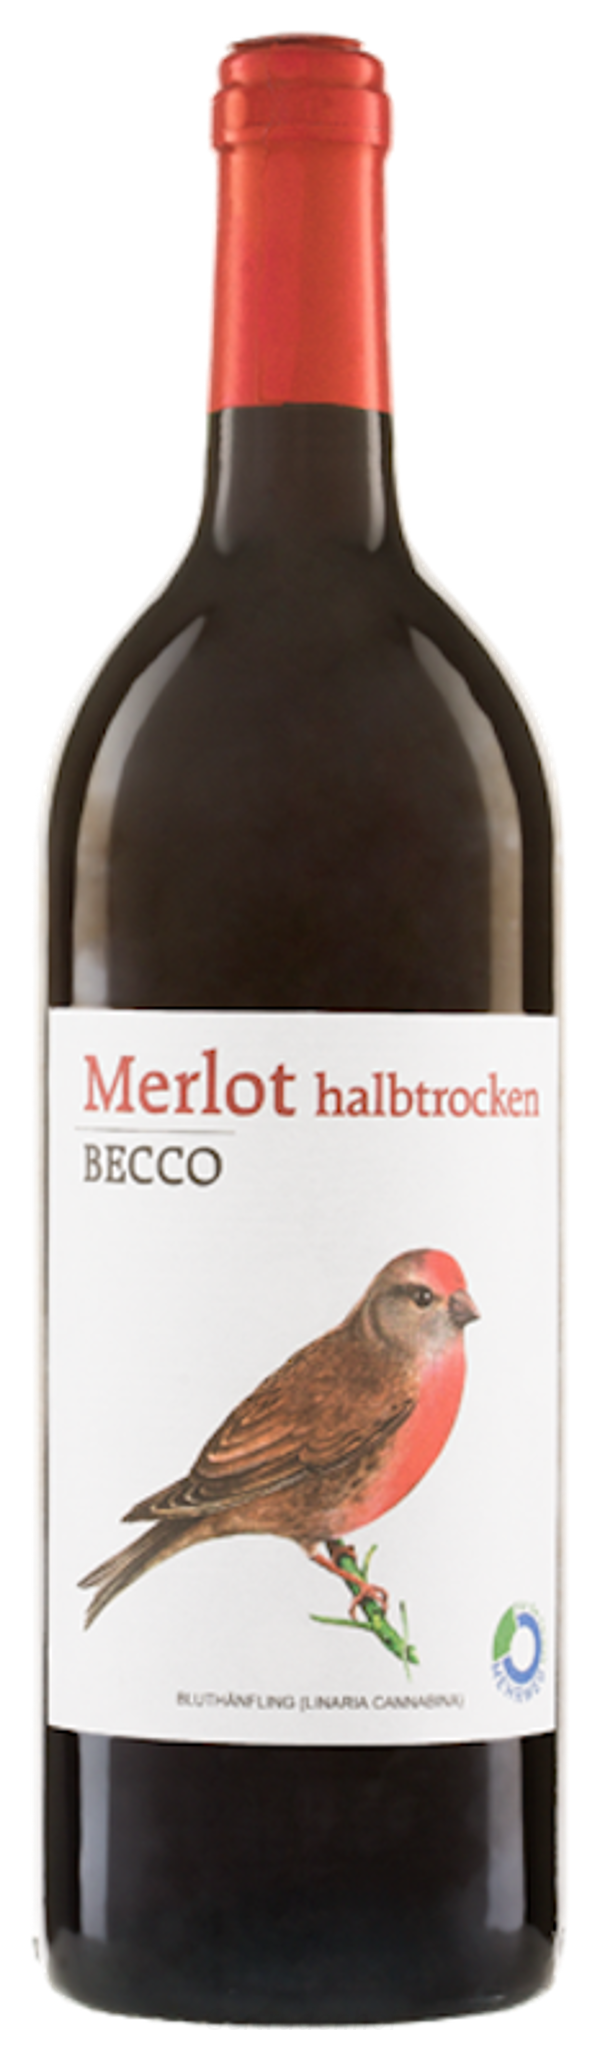 Produktfoto zu Becco Merlot halbtrocken rot